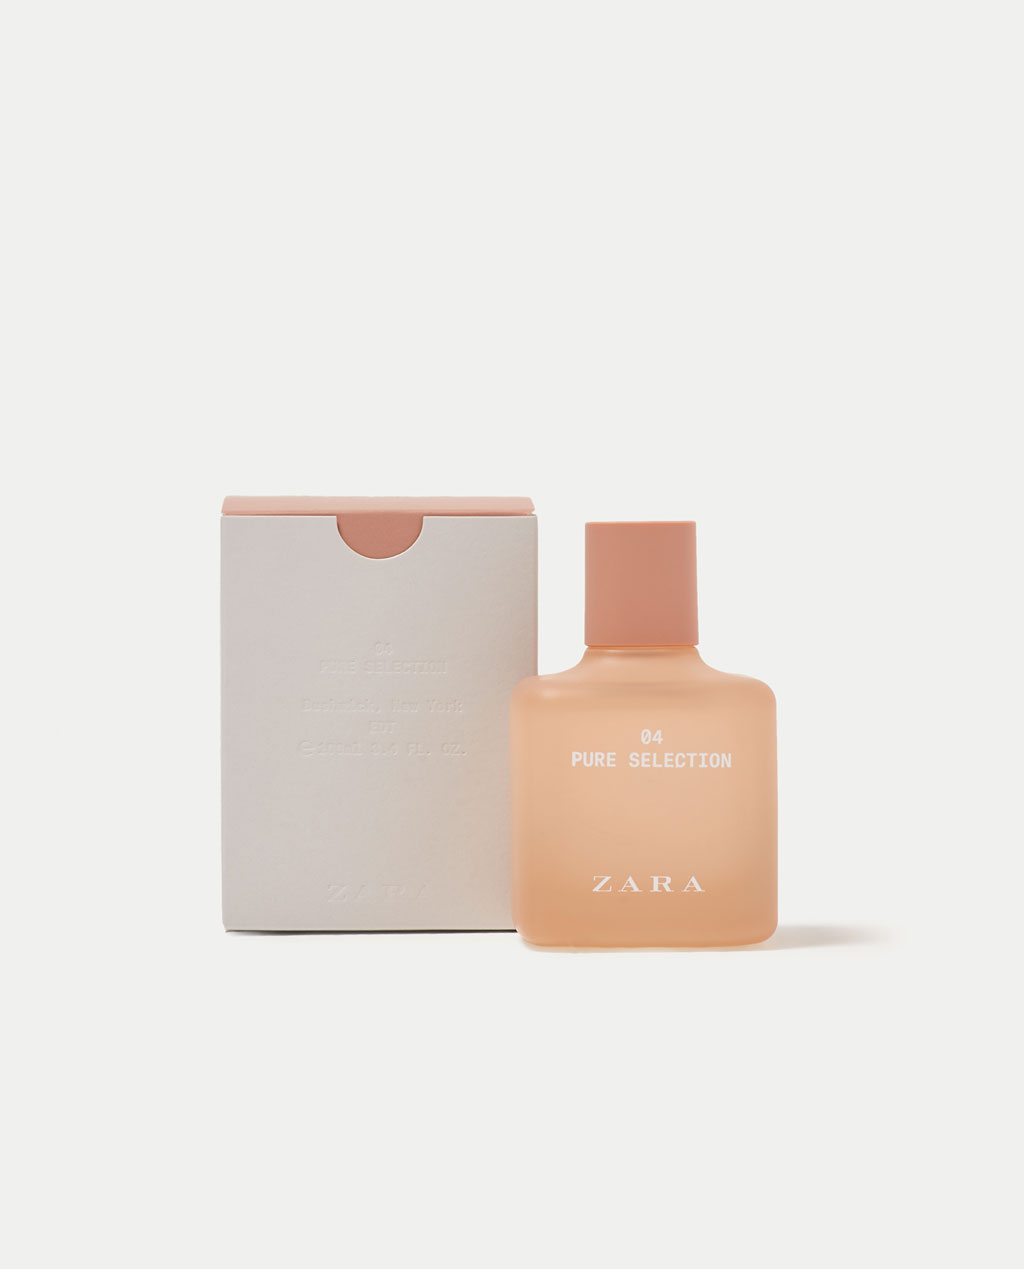 04 Pure Selection Zara perfume - a fragrance for women 2017